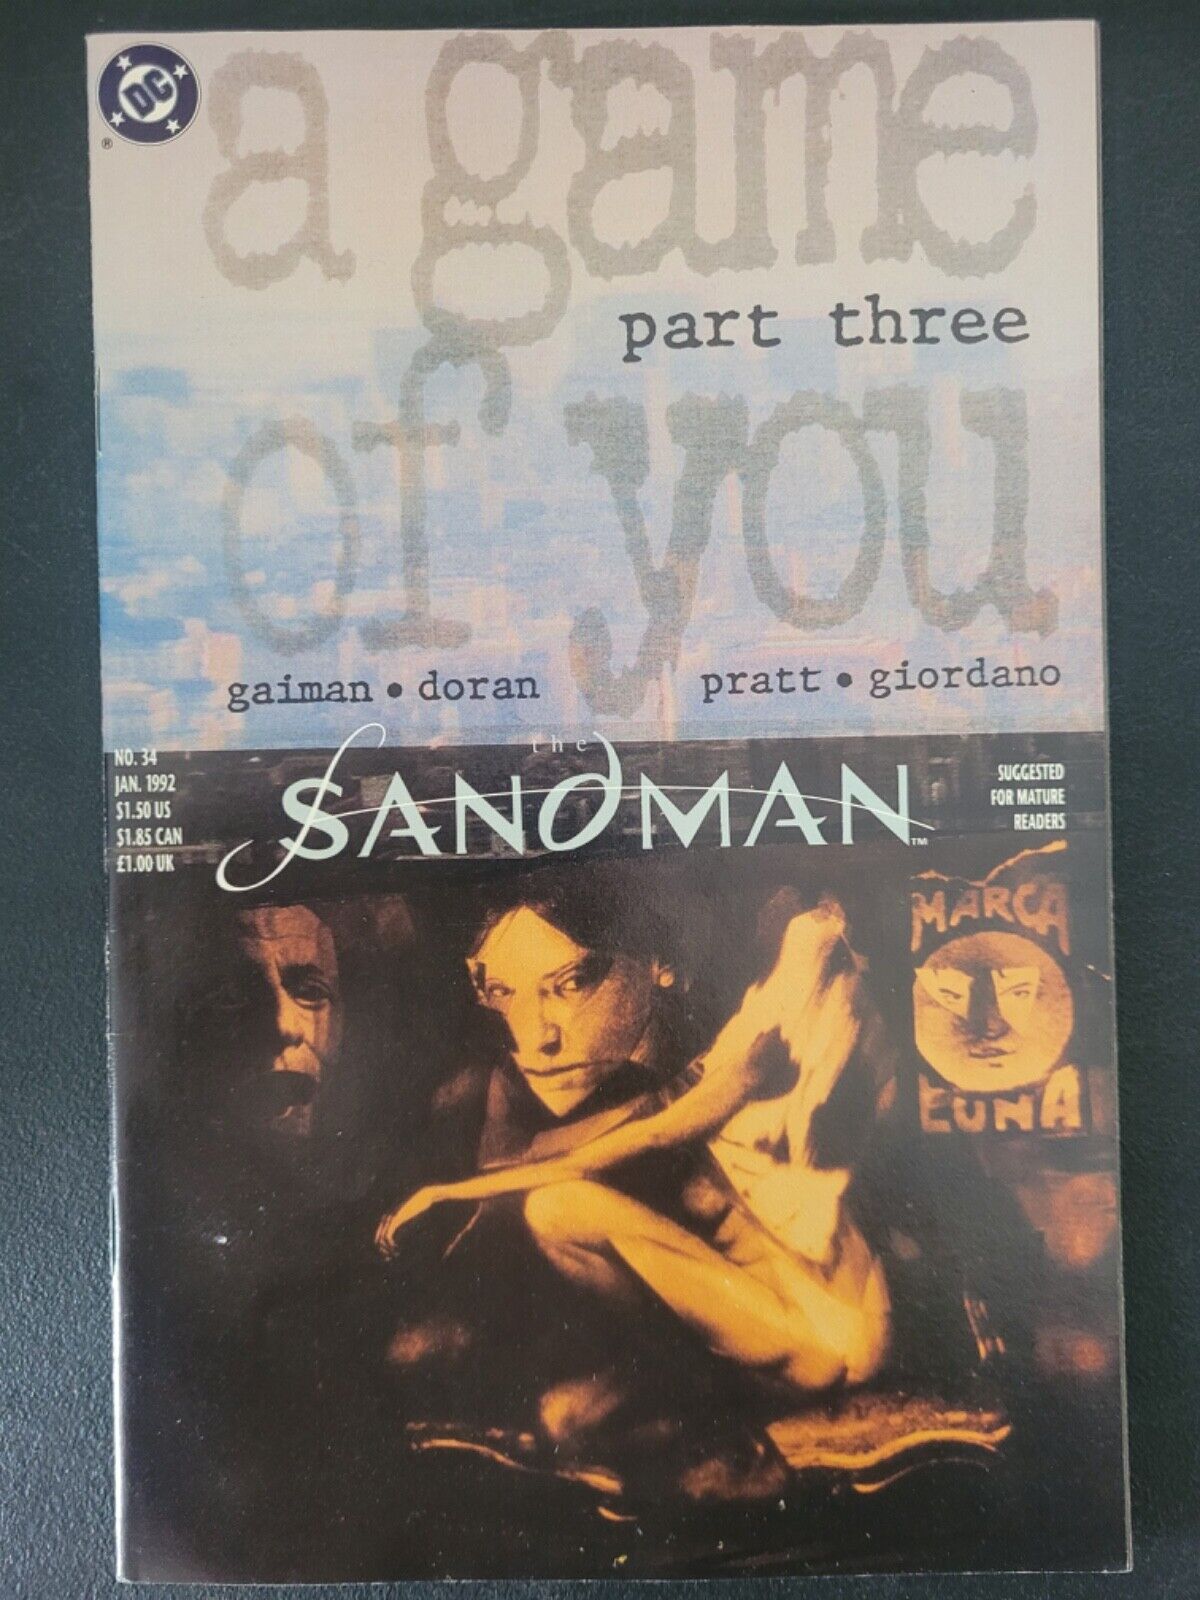 THE SANDMAN #34 (1991) DC COMIC A GAME OF YOU Part 3 NEIL GAIMAN COLLEEN DORAN